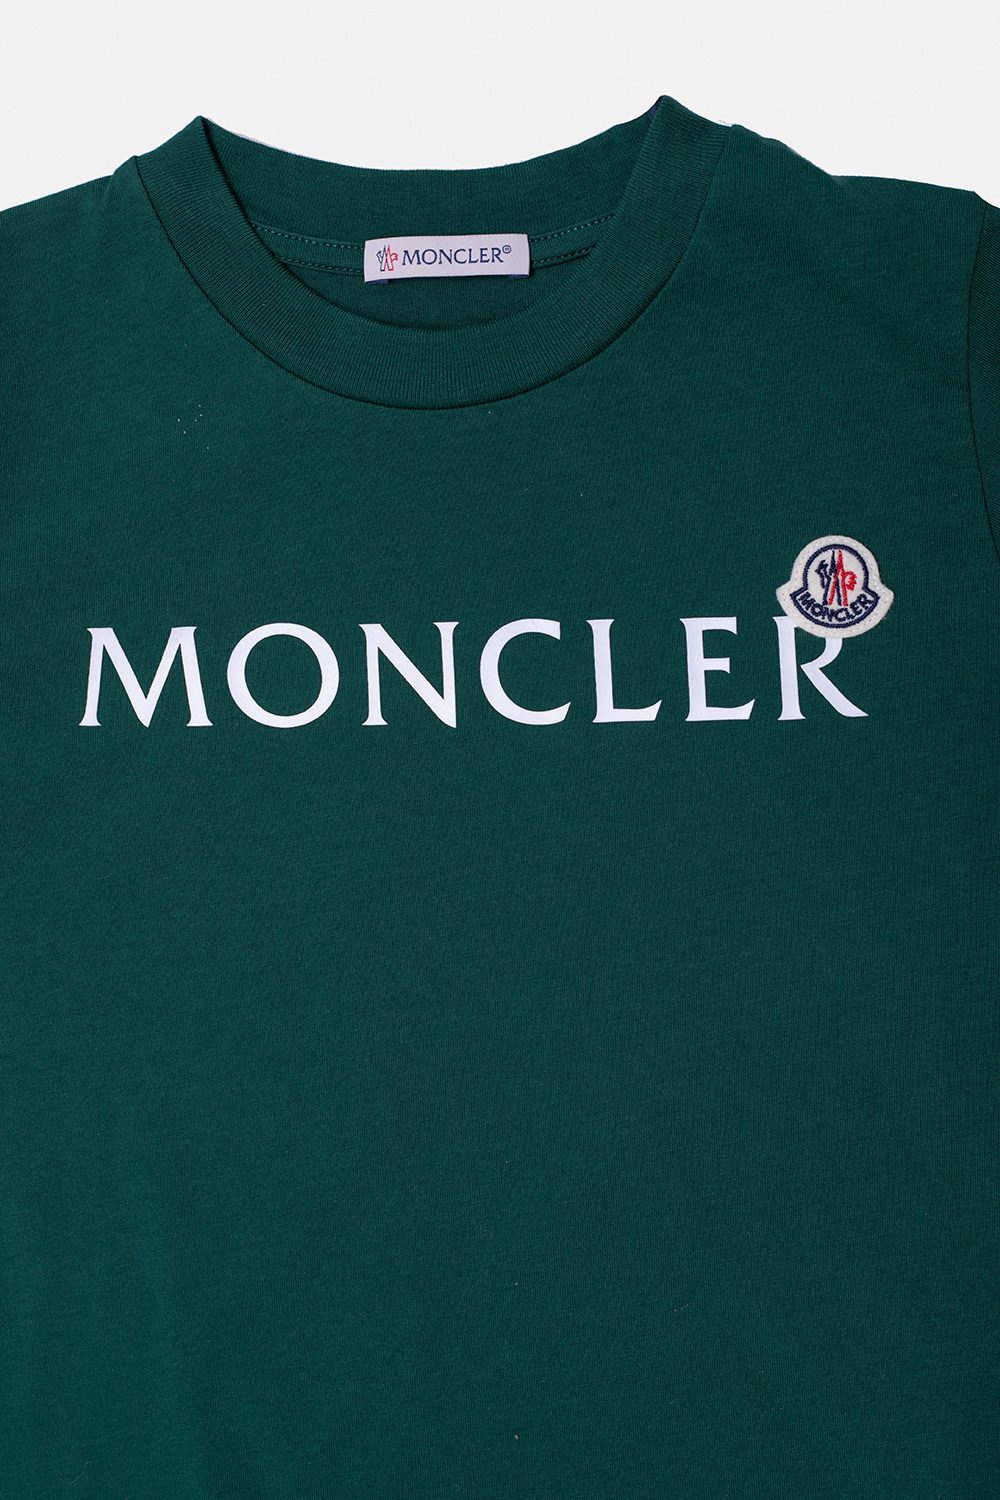 Moncler Enfant T-shirt rugby with logo